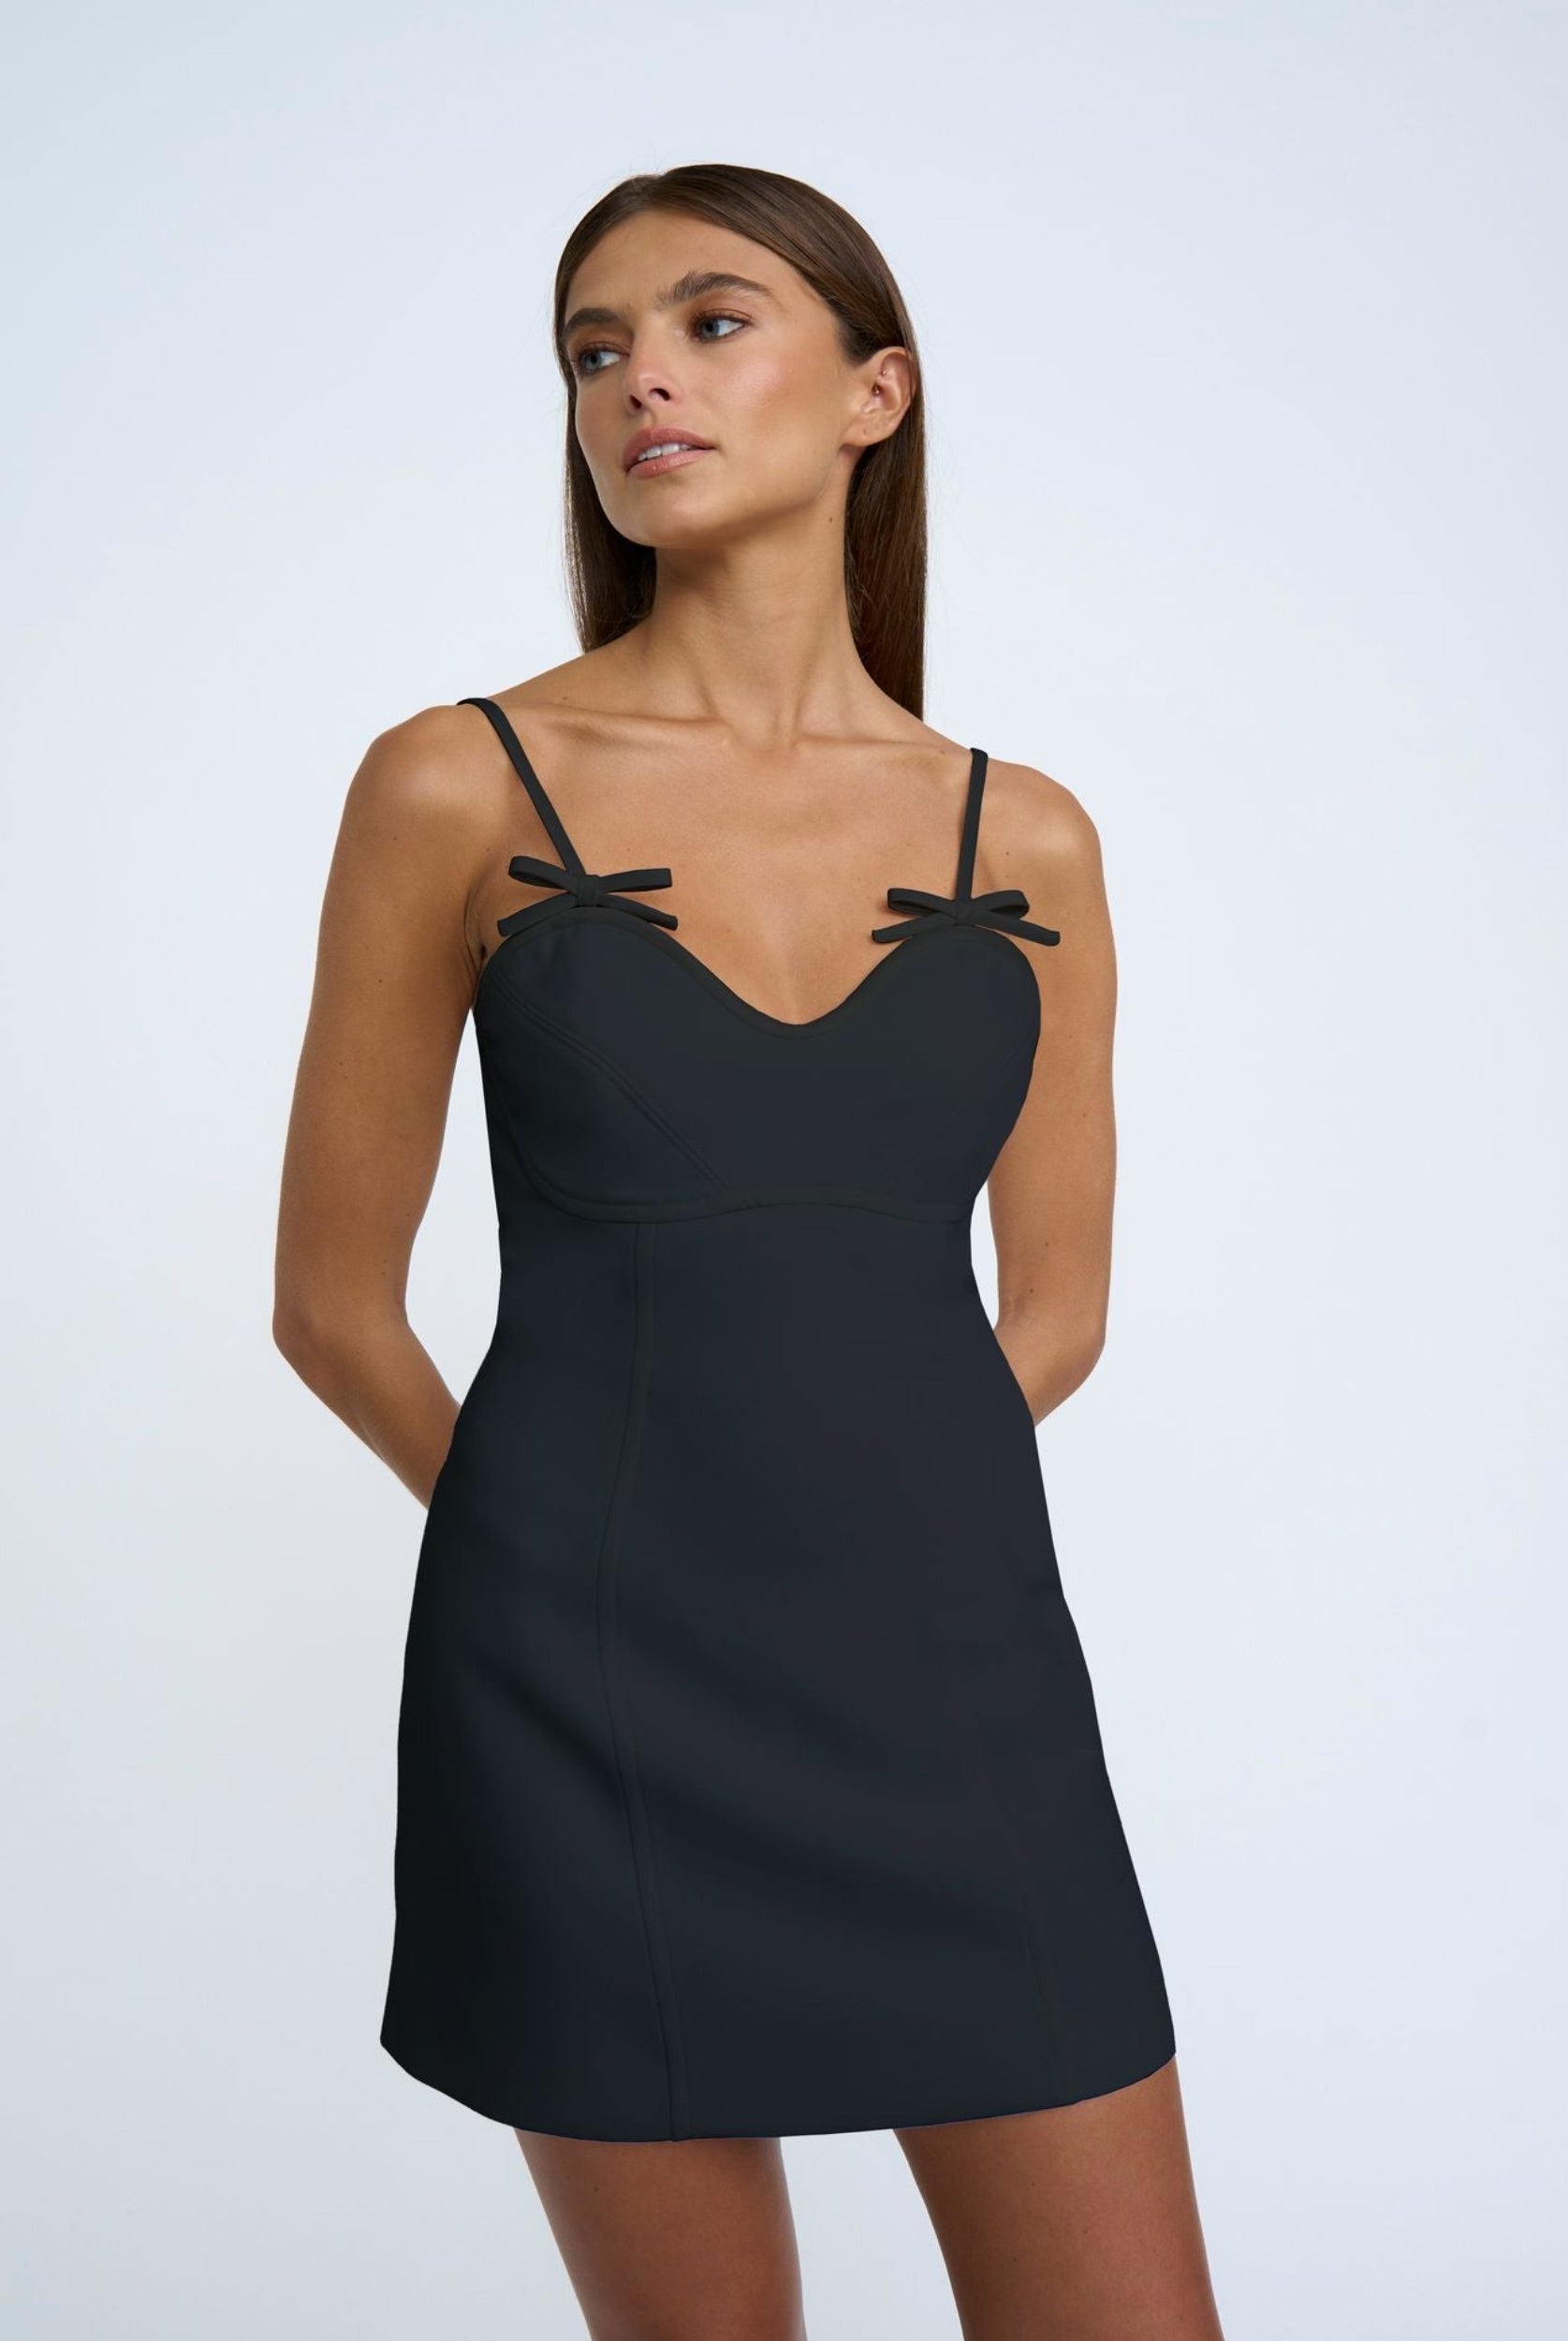 Model wearing the Bettina Bow Shift Dress in Black